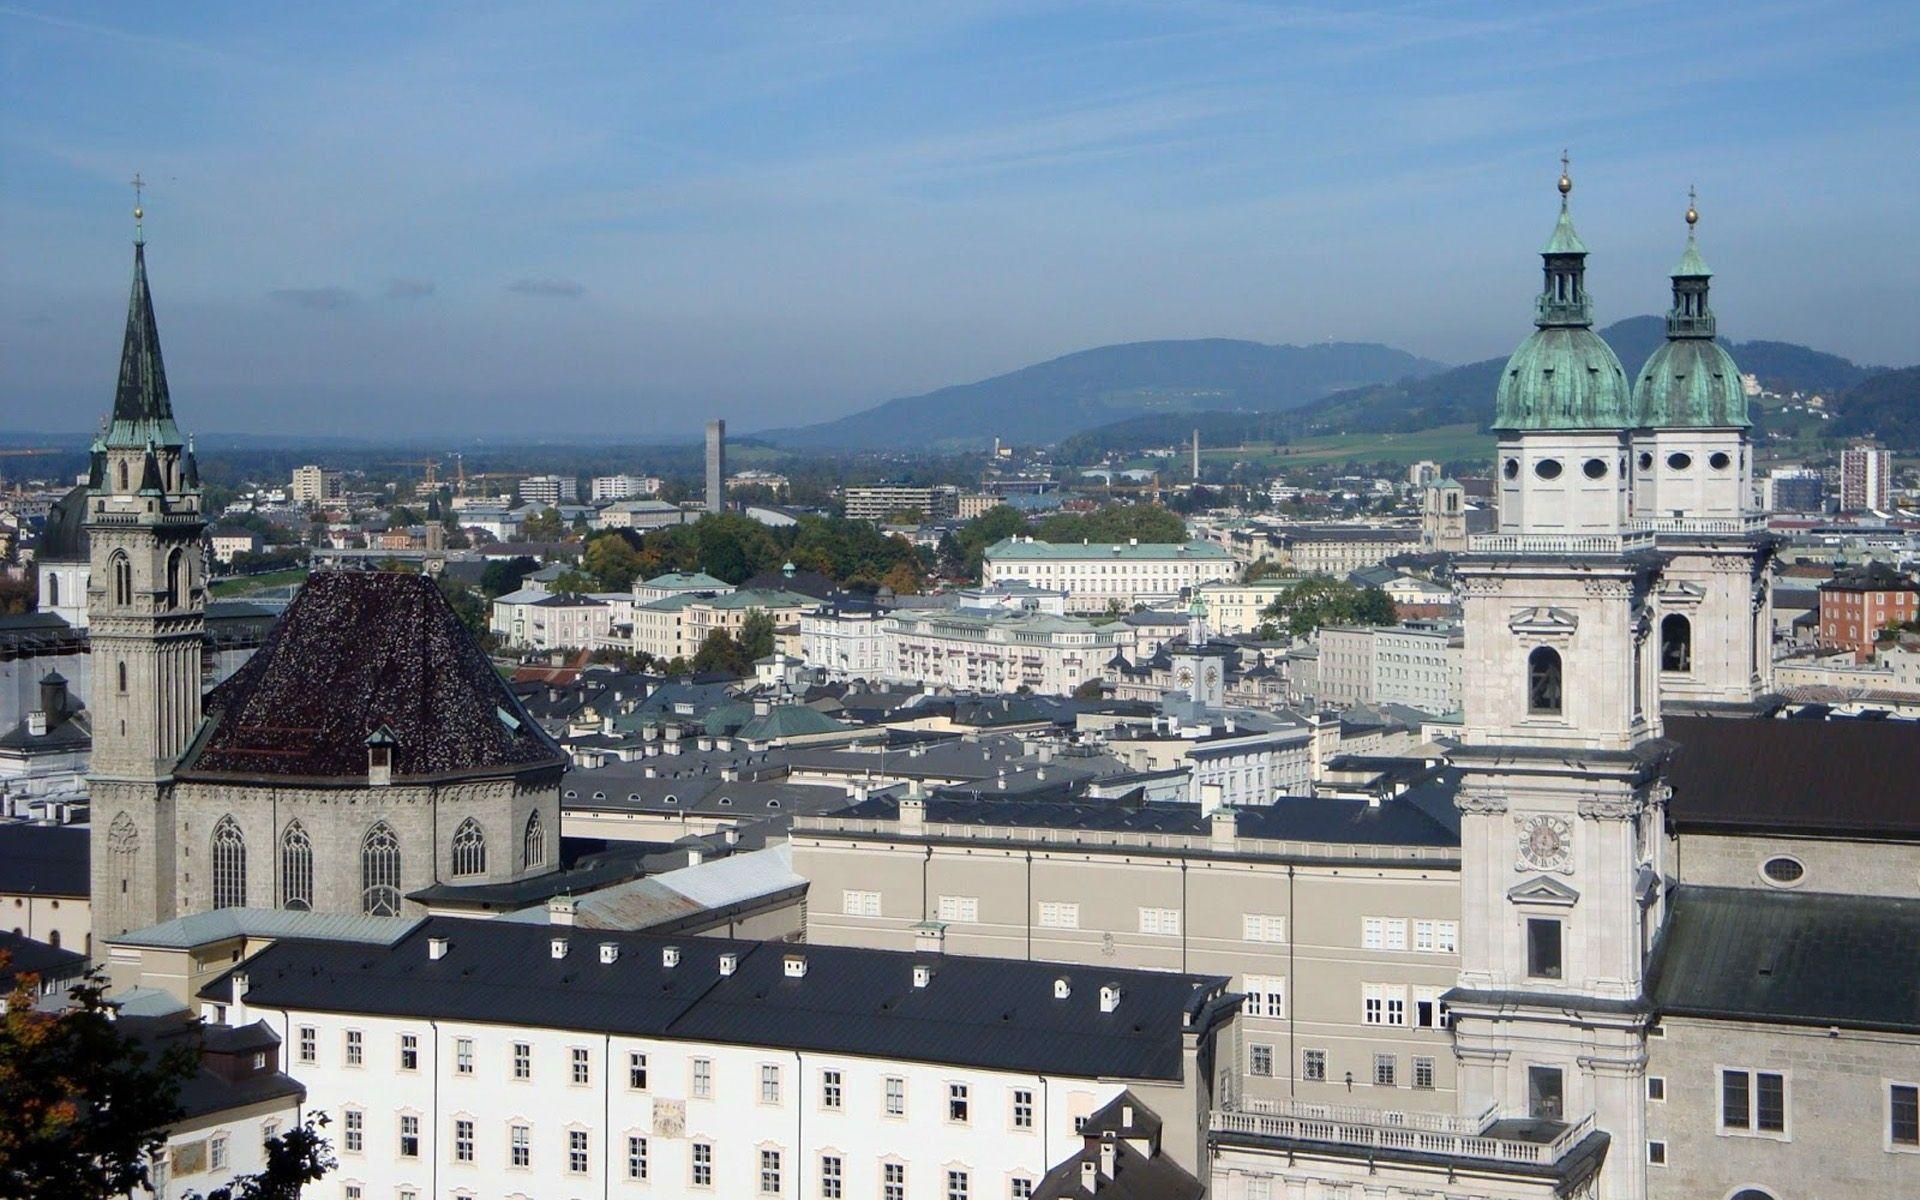 Salzburg City Austria